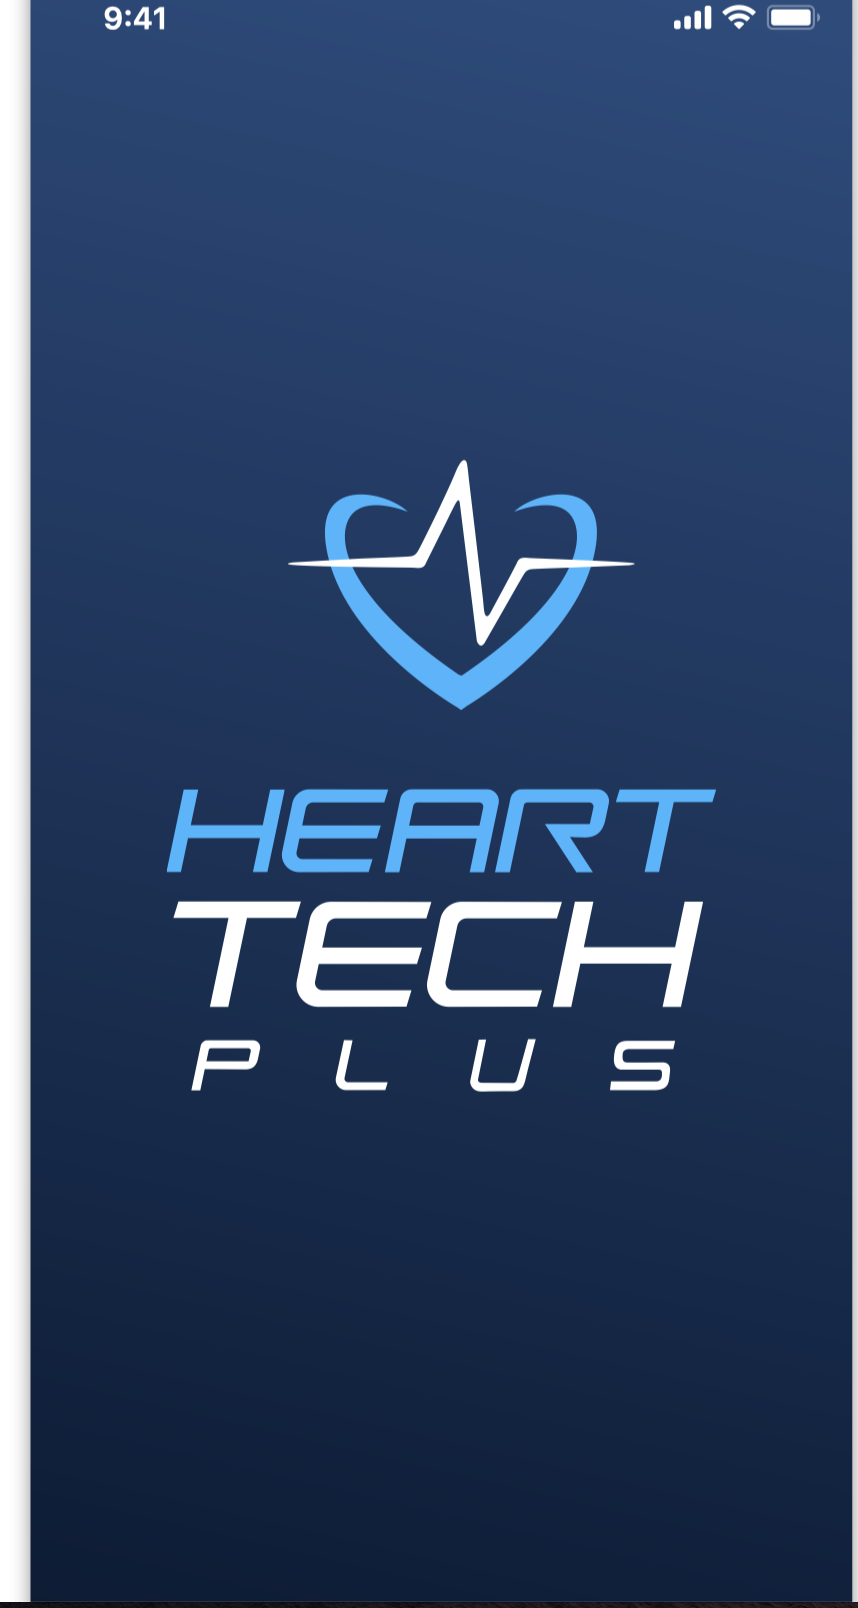 Heart Tech Plus